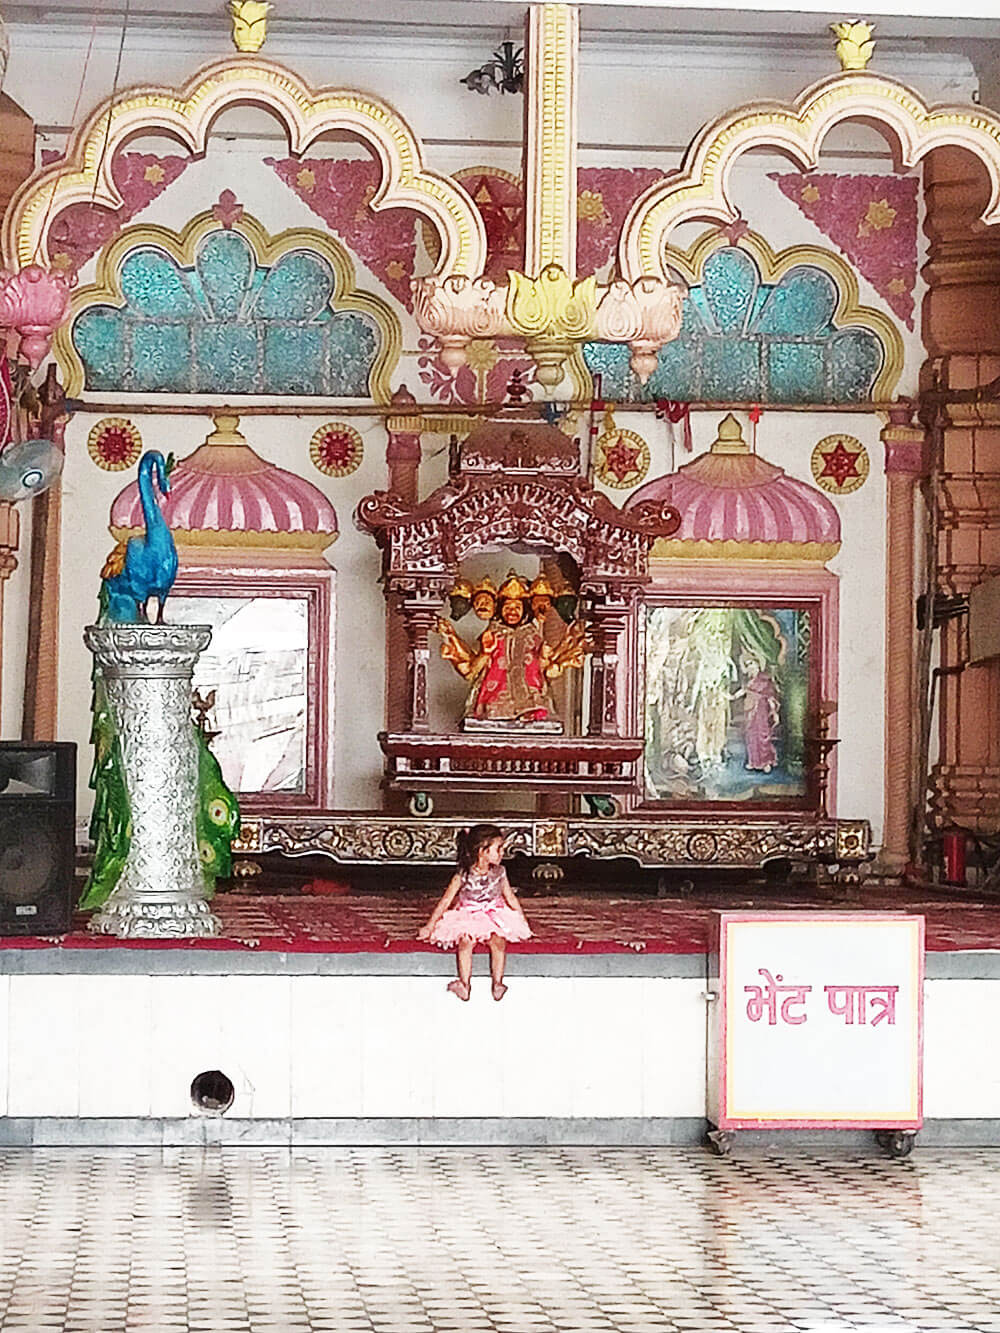 Shri Adhya Katyayani Shaktipeeth Temple, Delhi